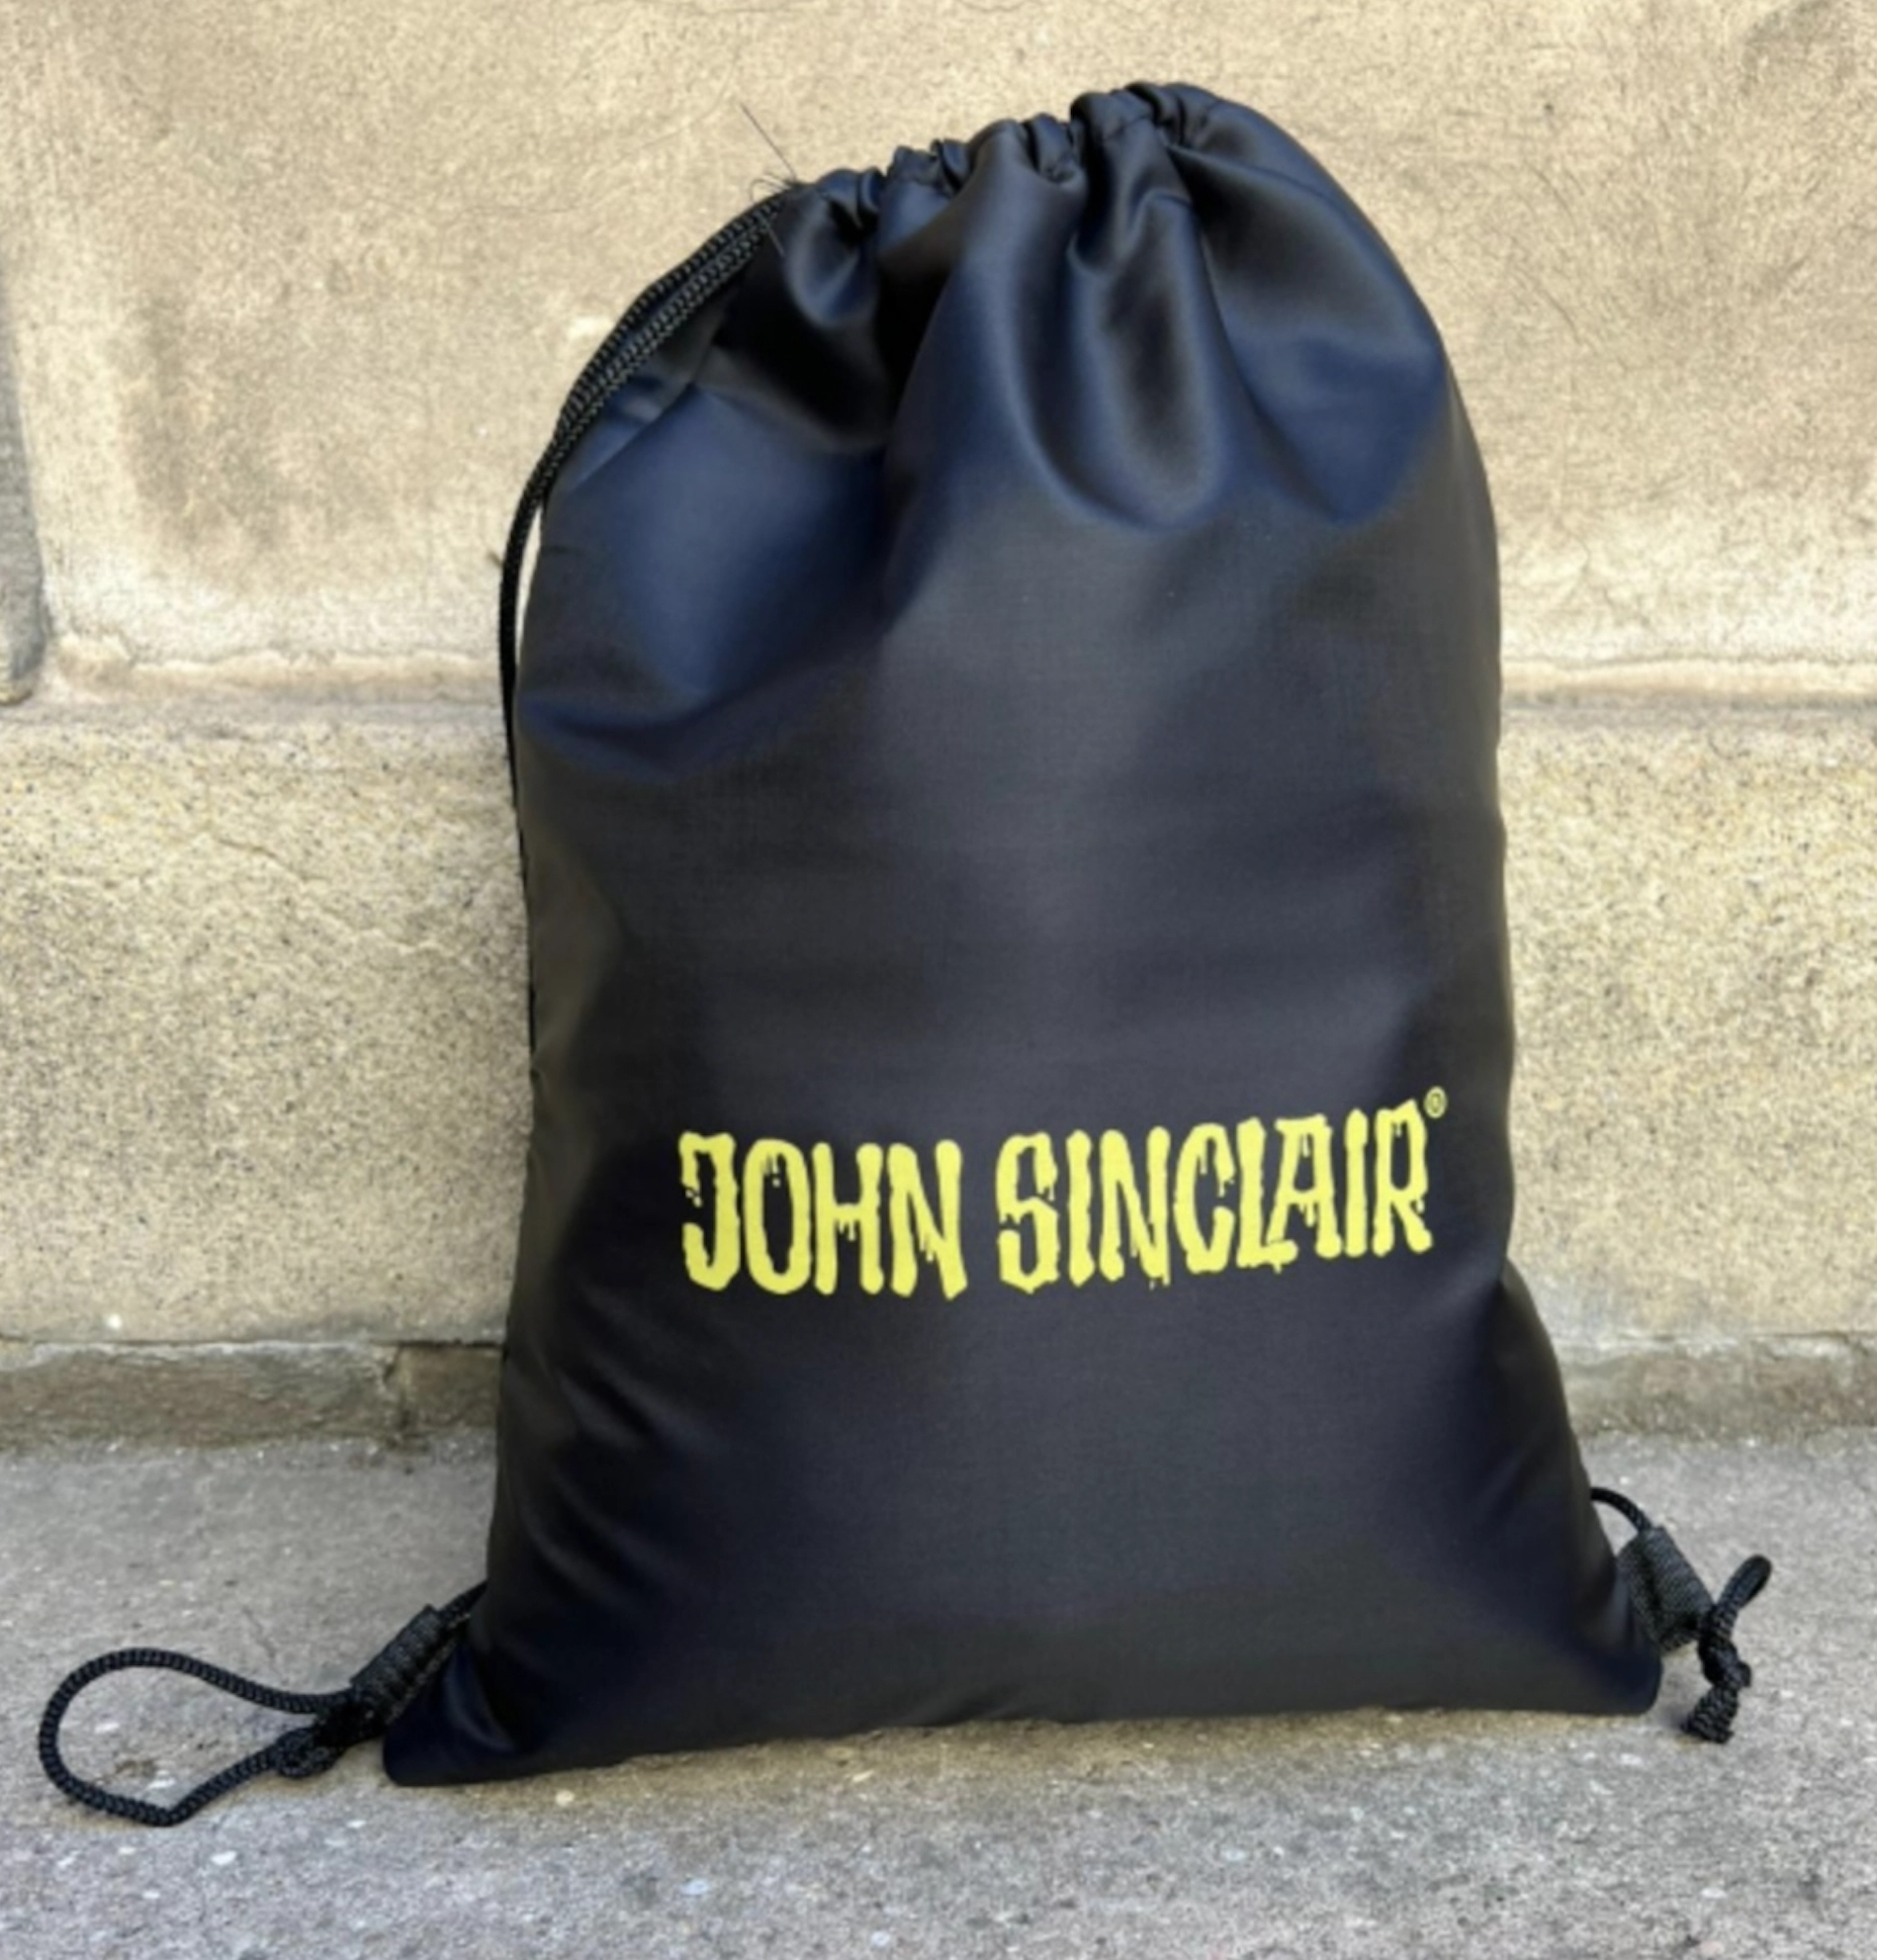 John Sinclair - Engel? - CD SE12